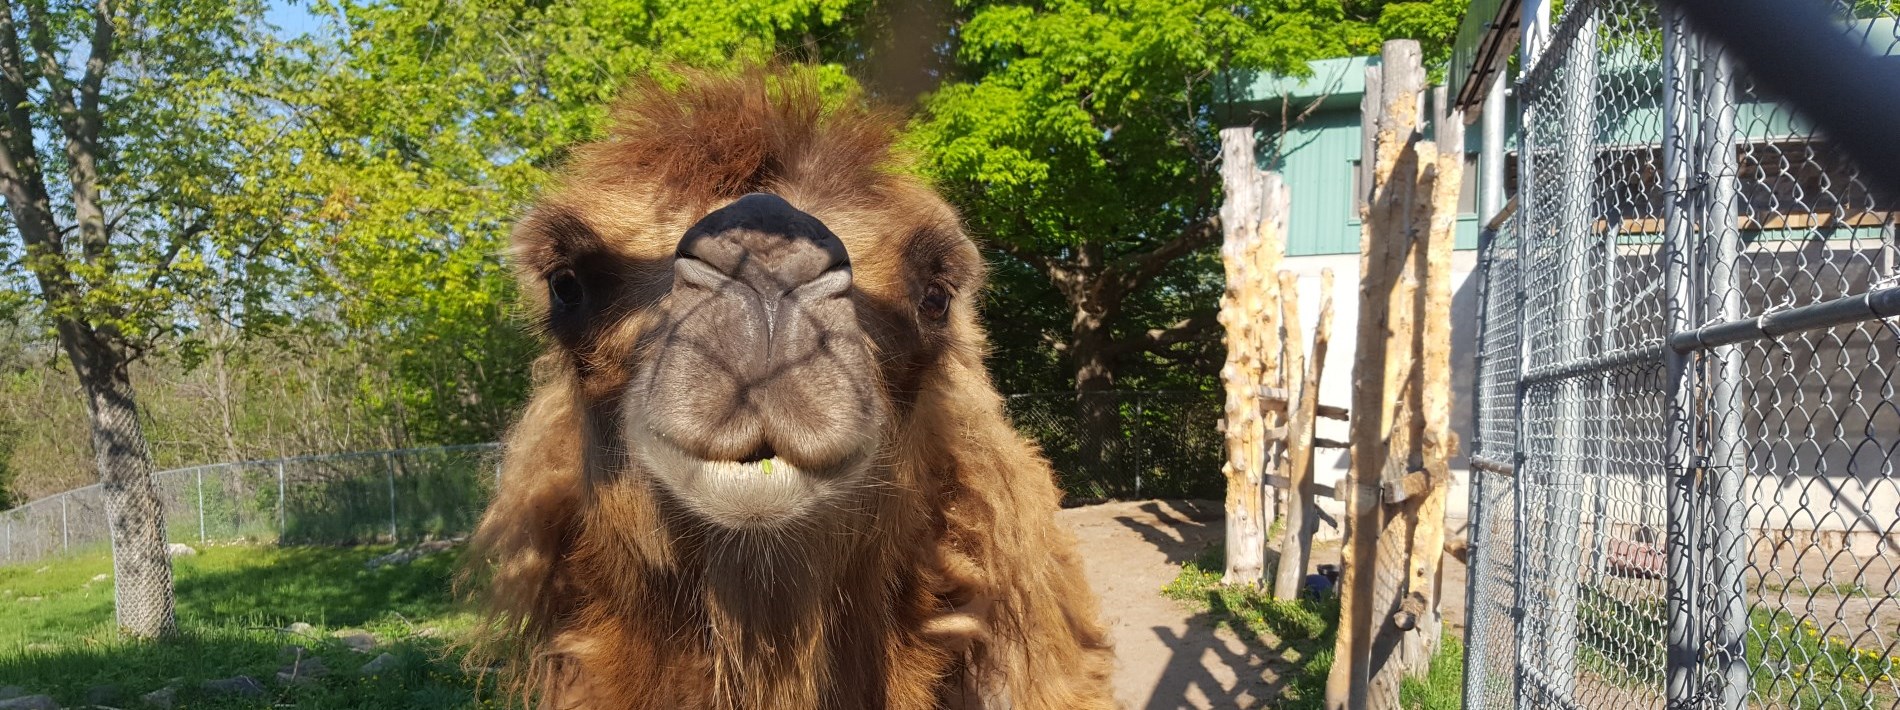 close up of camel face